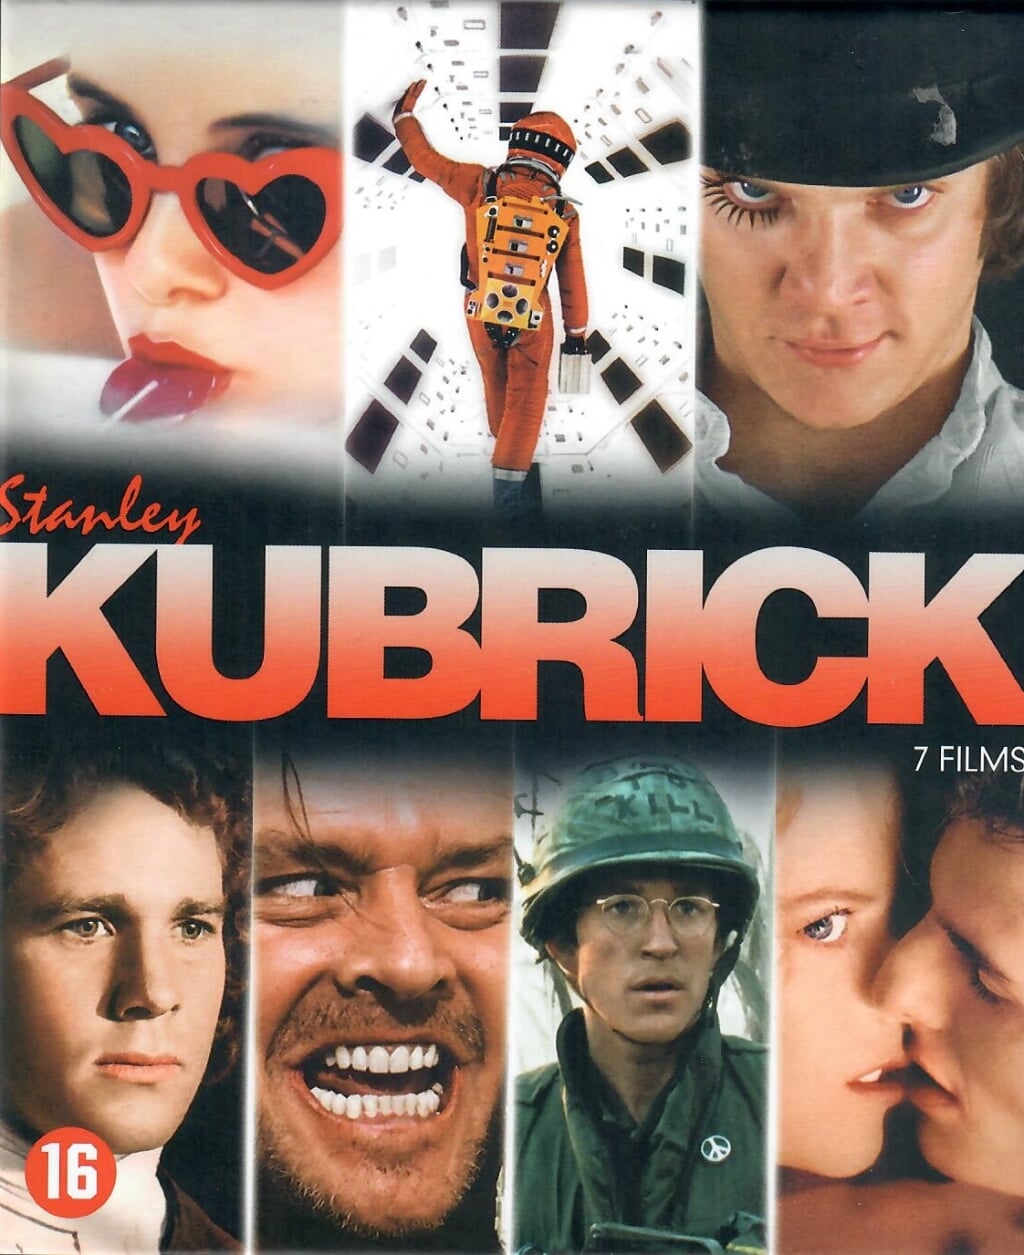 DVD set Stanley Kubrick 7 films